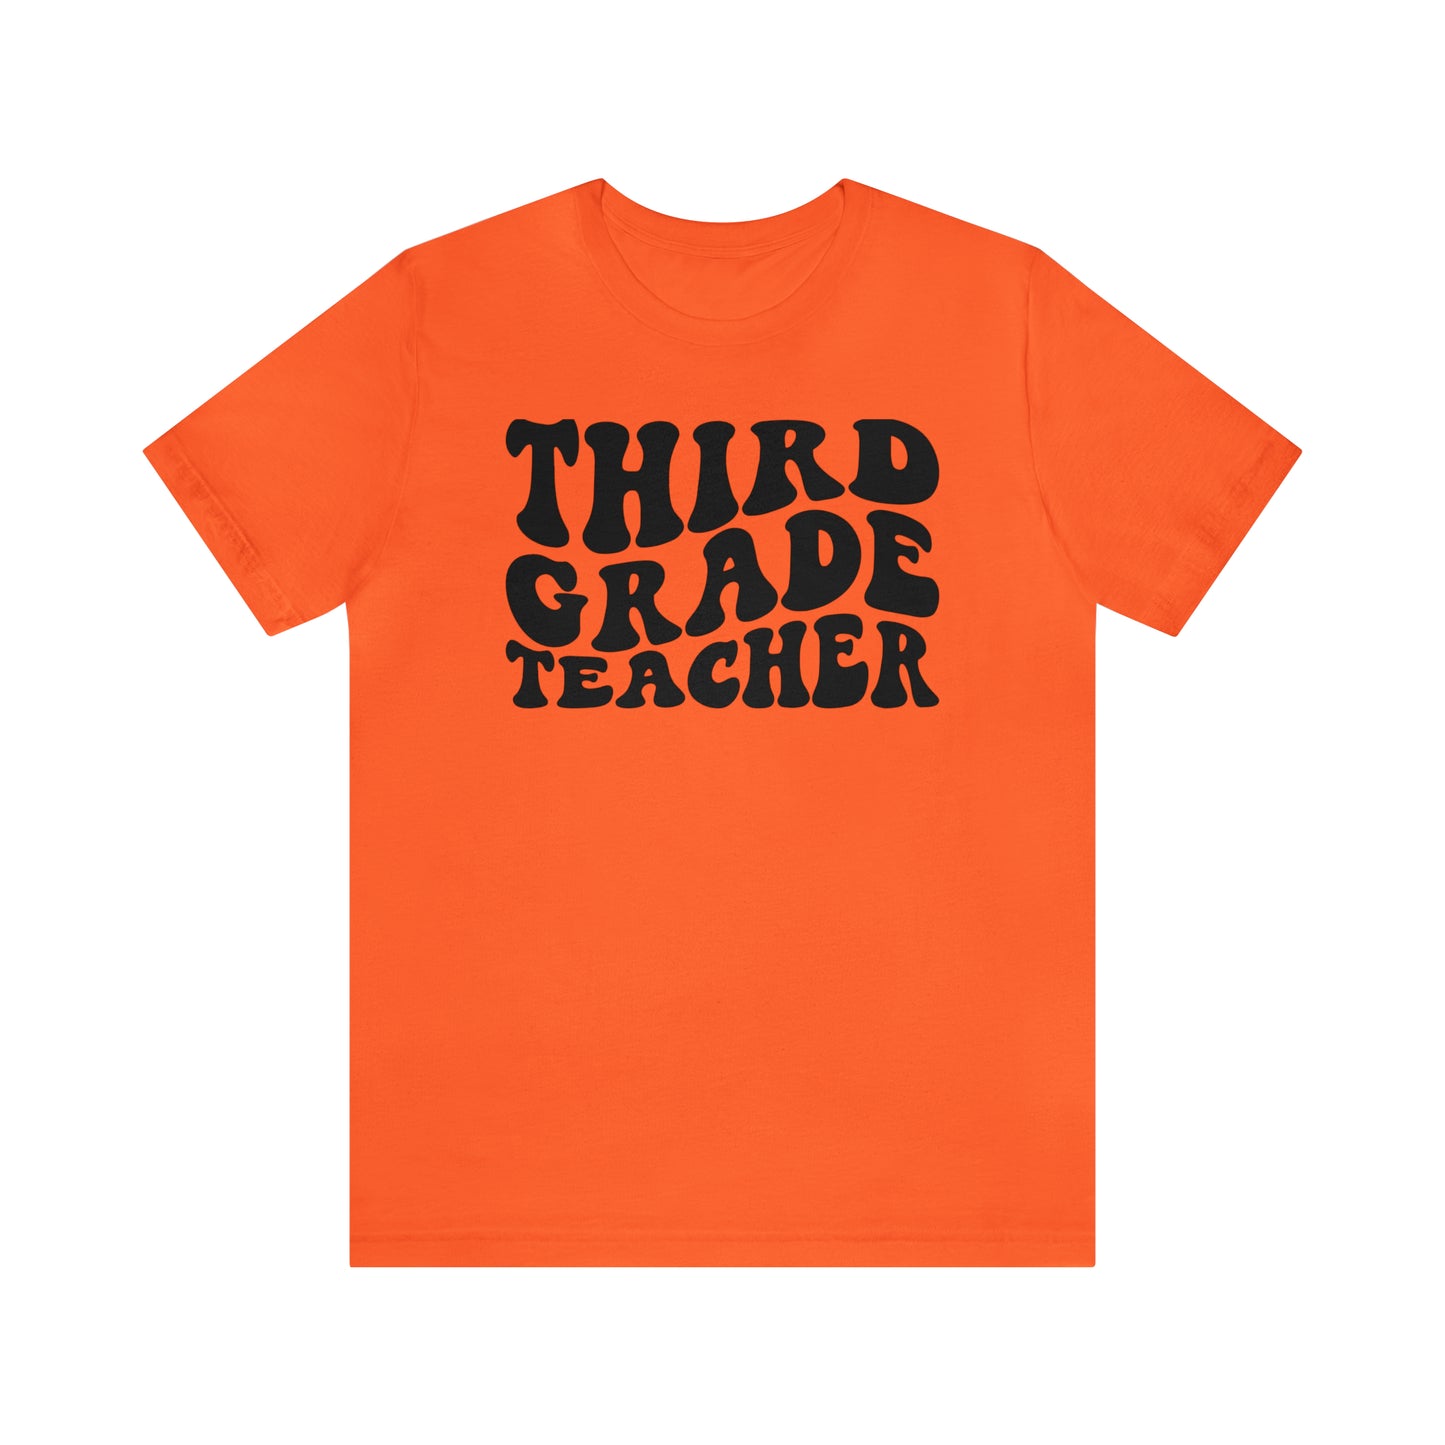 Black Groovy Retro "Third Grade Teacher" tee